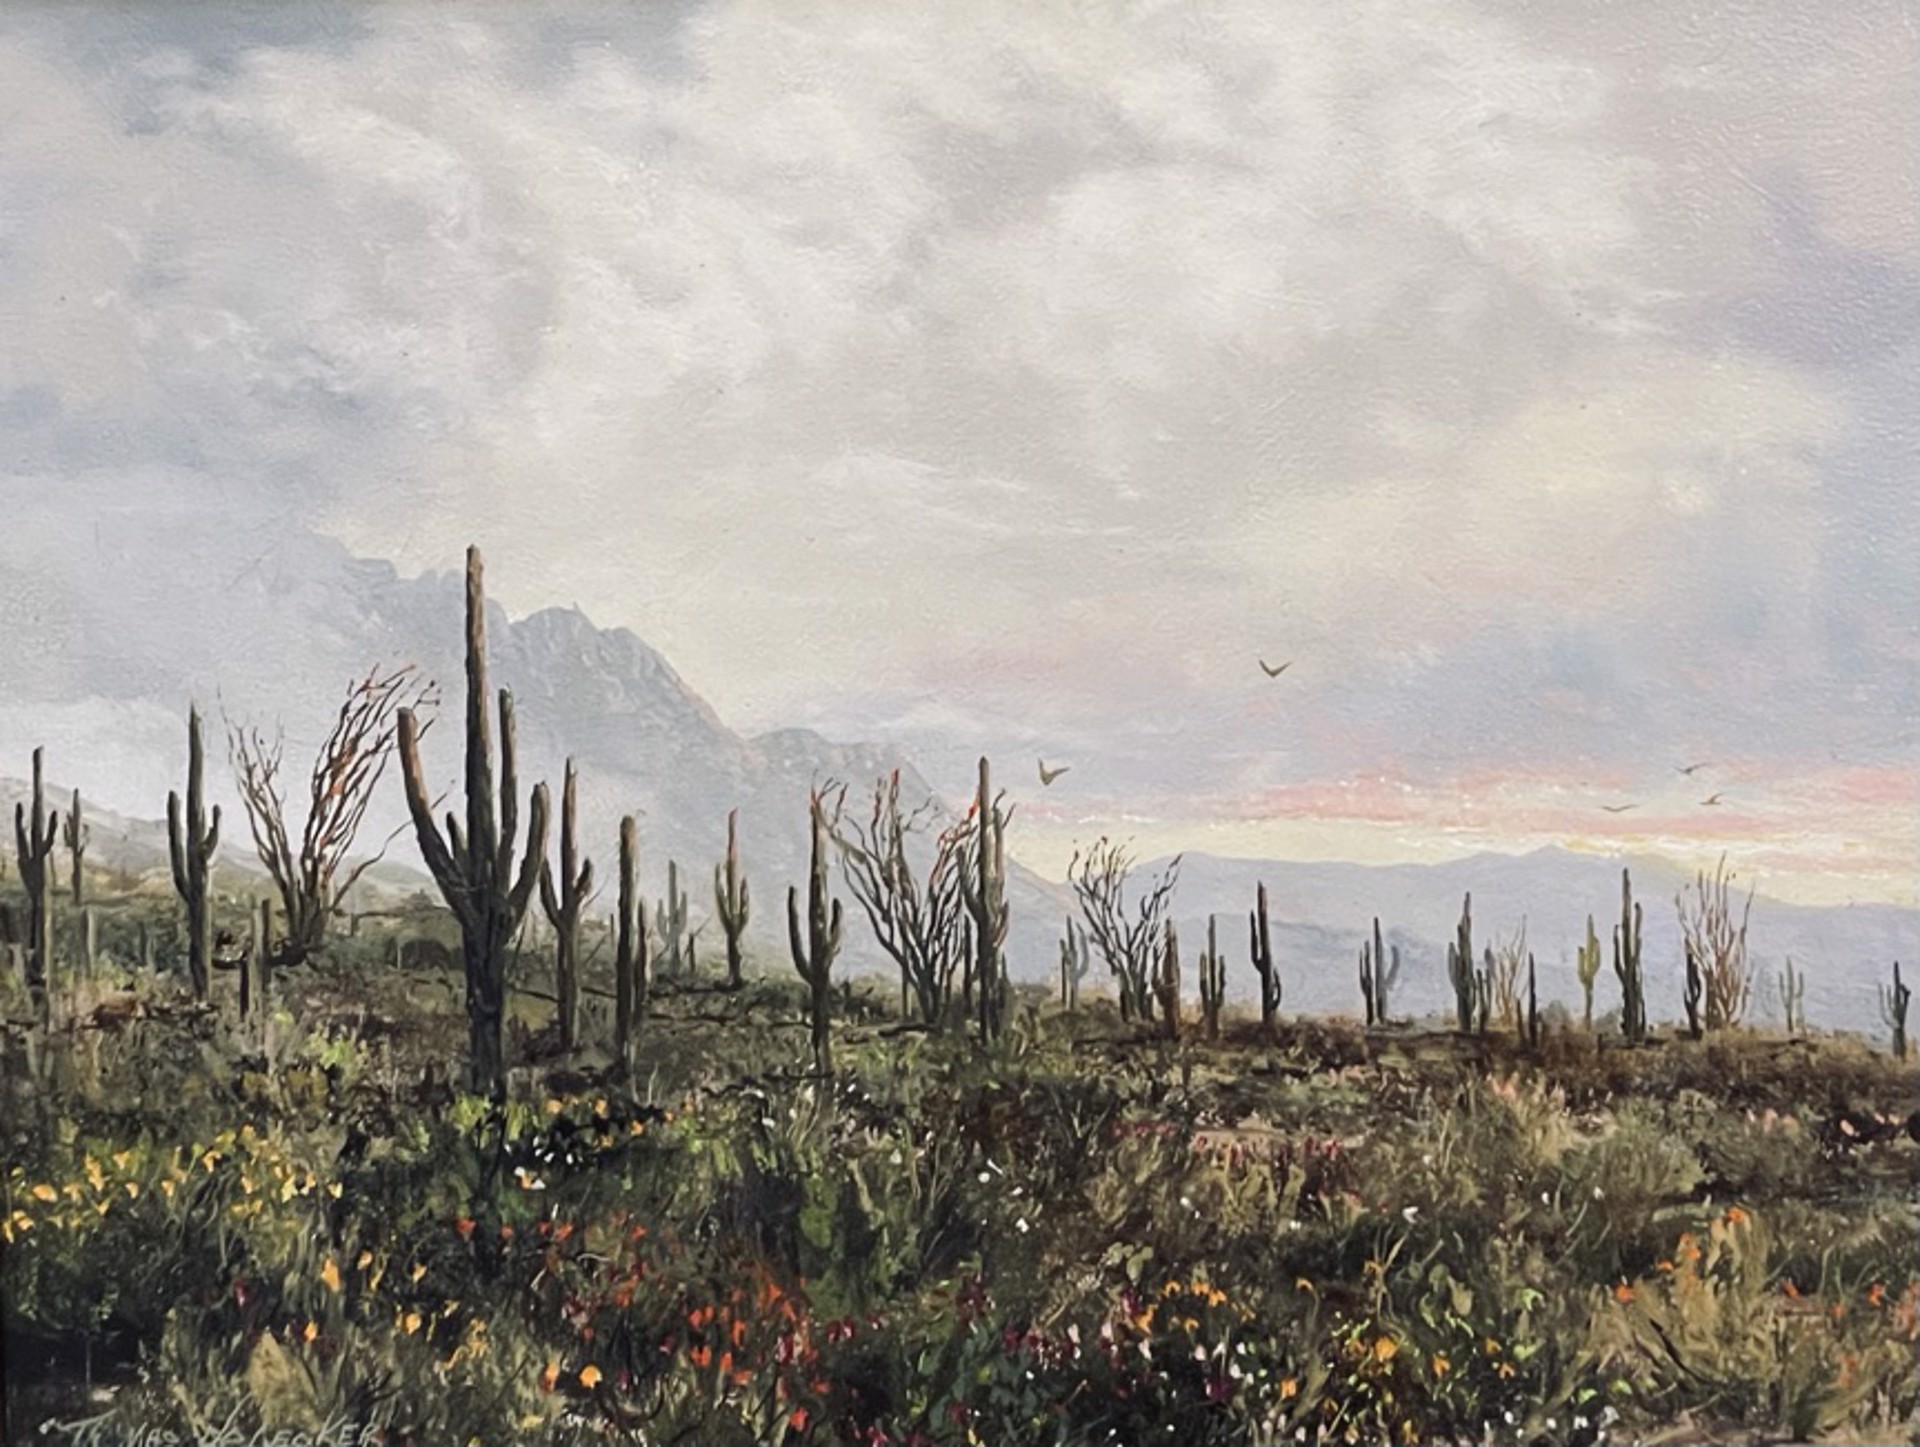 Saguaro Desert AZ by Thomas deDecker